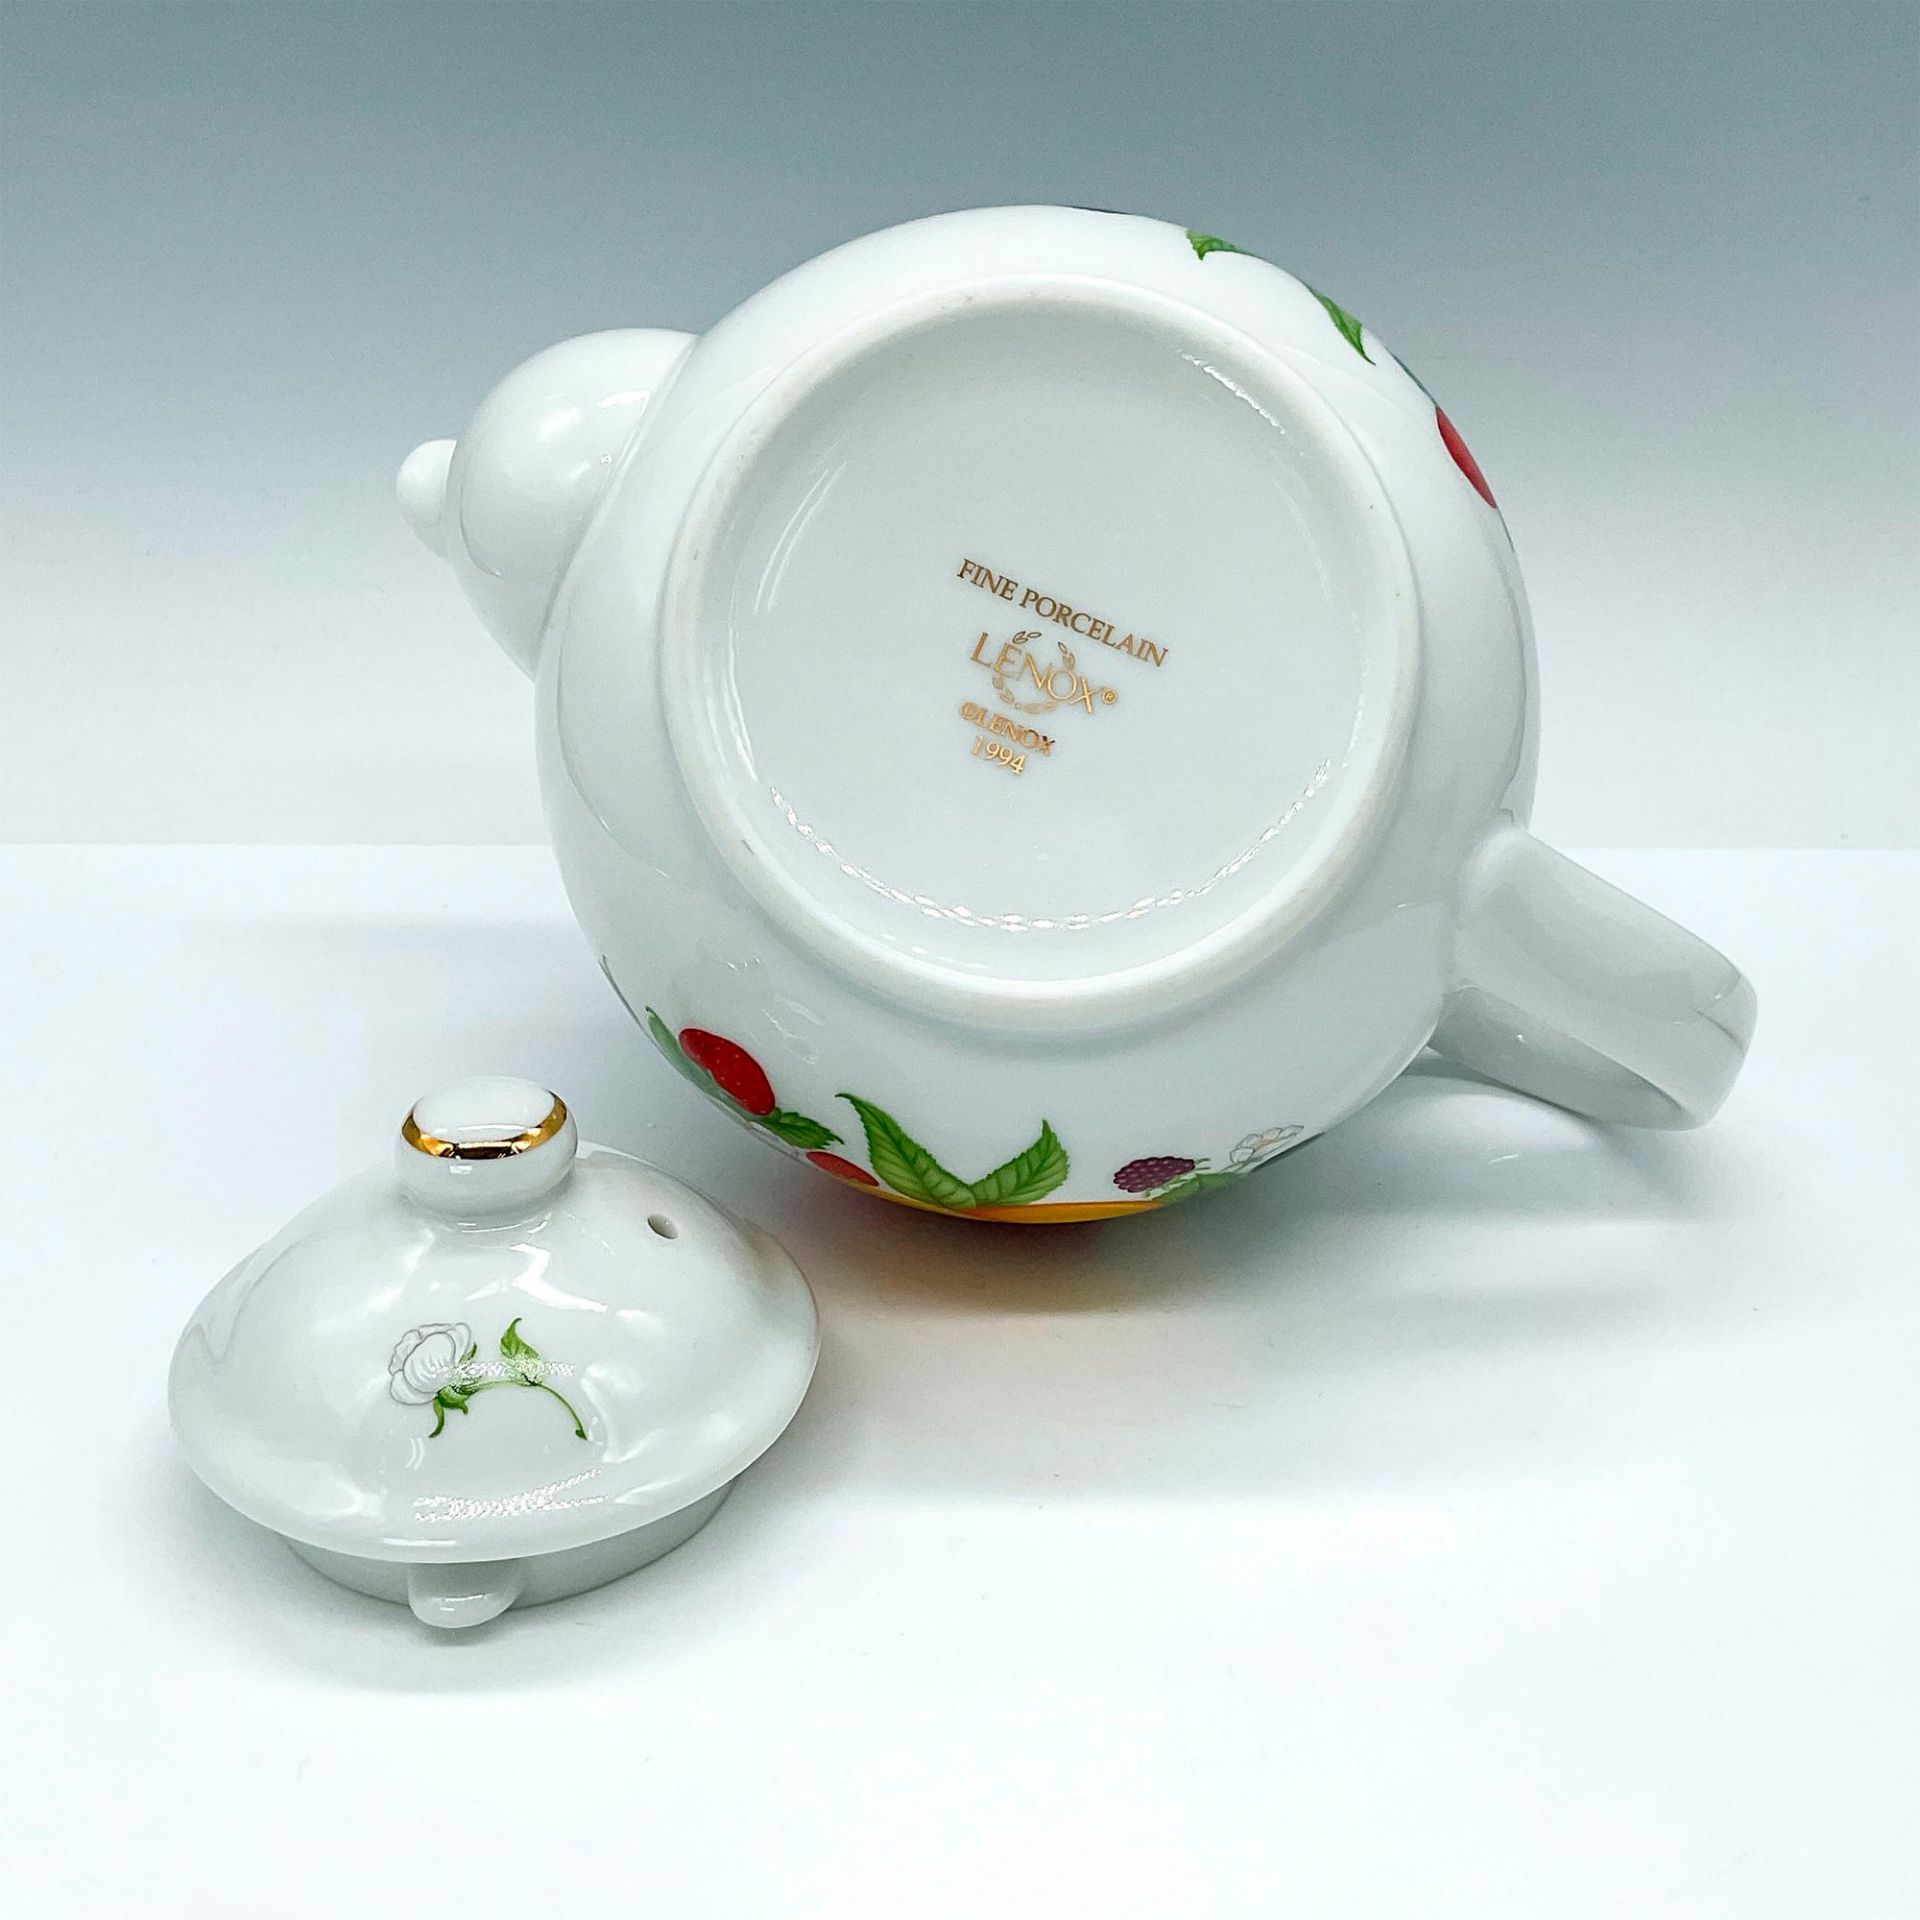 Lenox Porcelain Fruit Decorated Teapot - Image 3 of 3